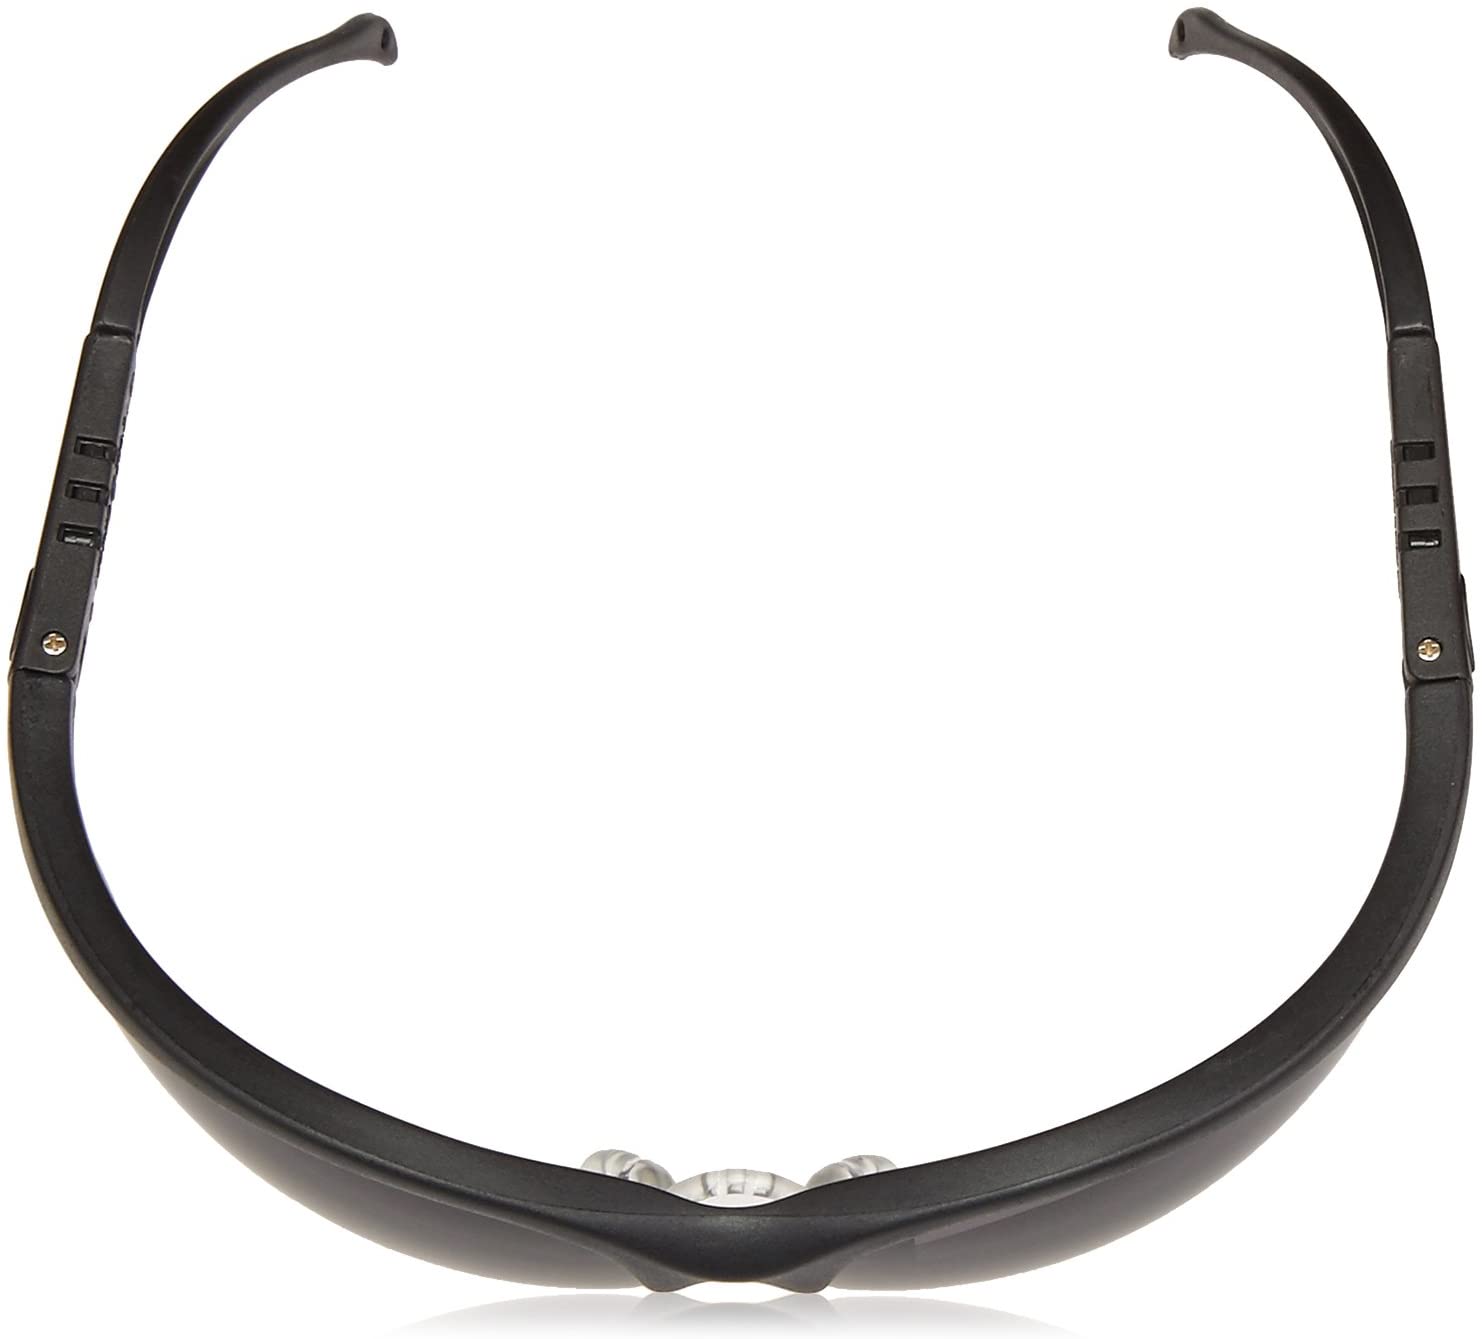 MCR Crews KD112 Klondike Safety Glasses - Black Frame, Grey Lens